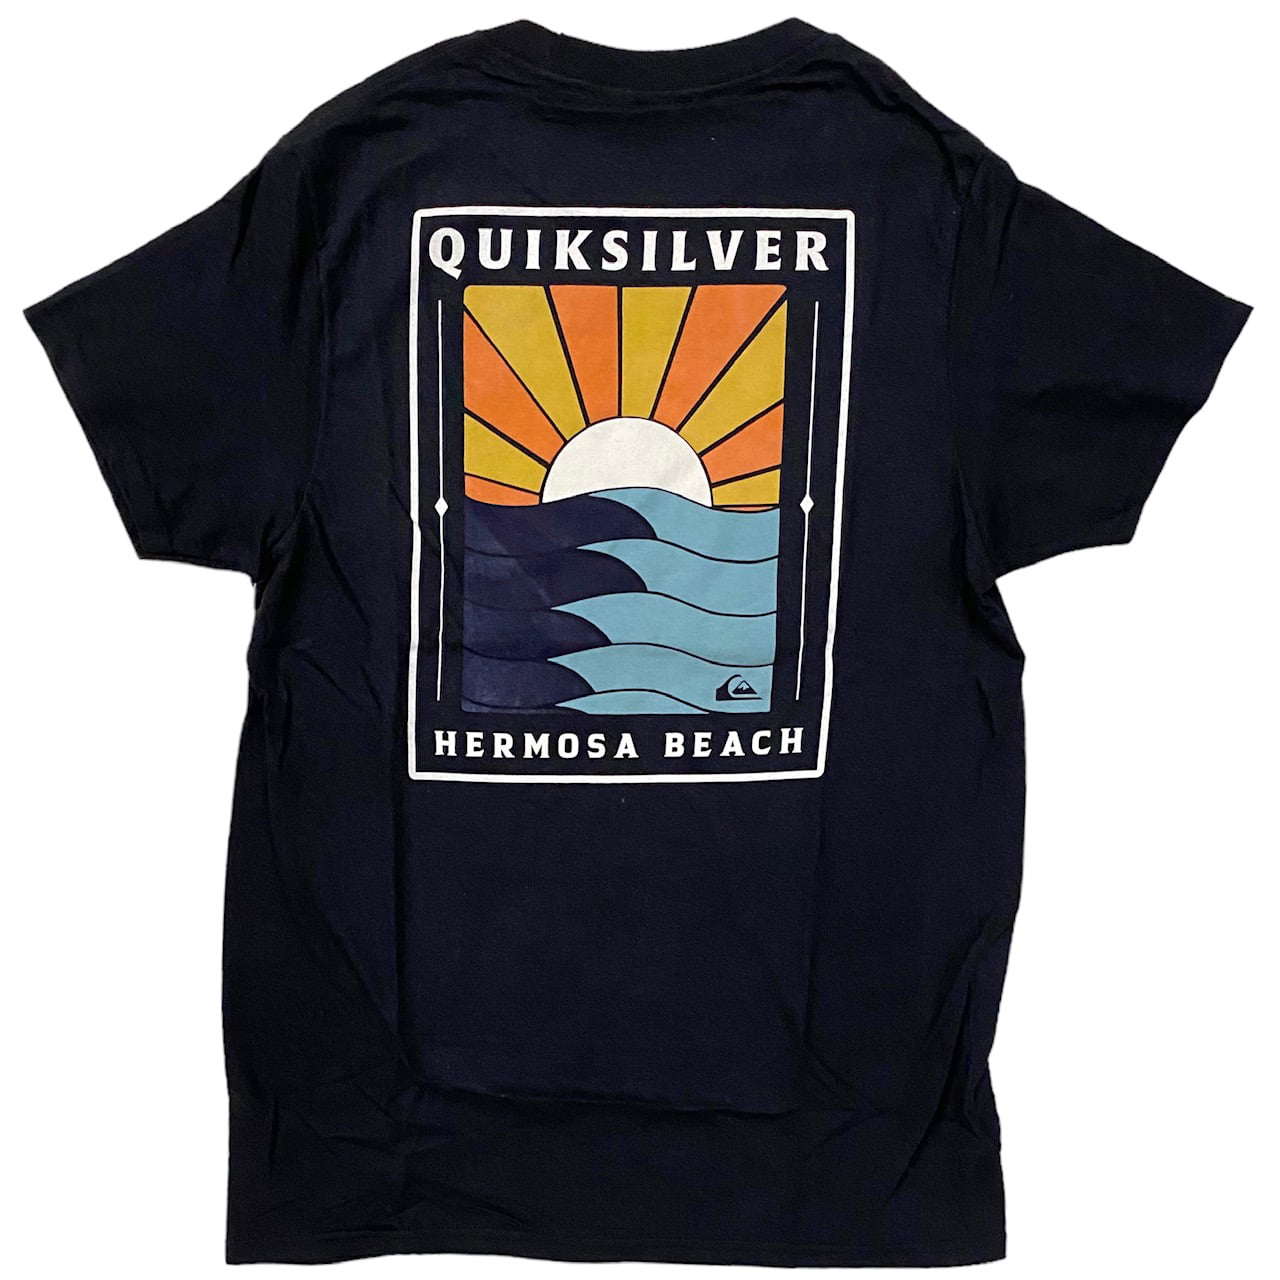 Blaze kroeg Mijnwerker Quiksilver Men's No Sunny Days Hermosa Beach Tee T-Shirt (Large, Black) -  Walmart.com